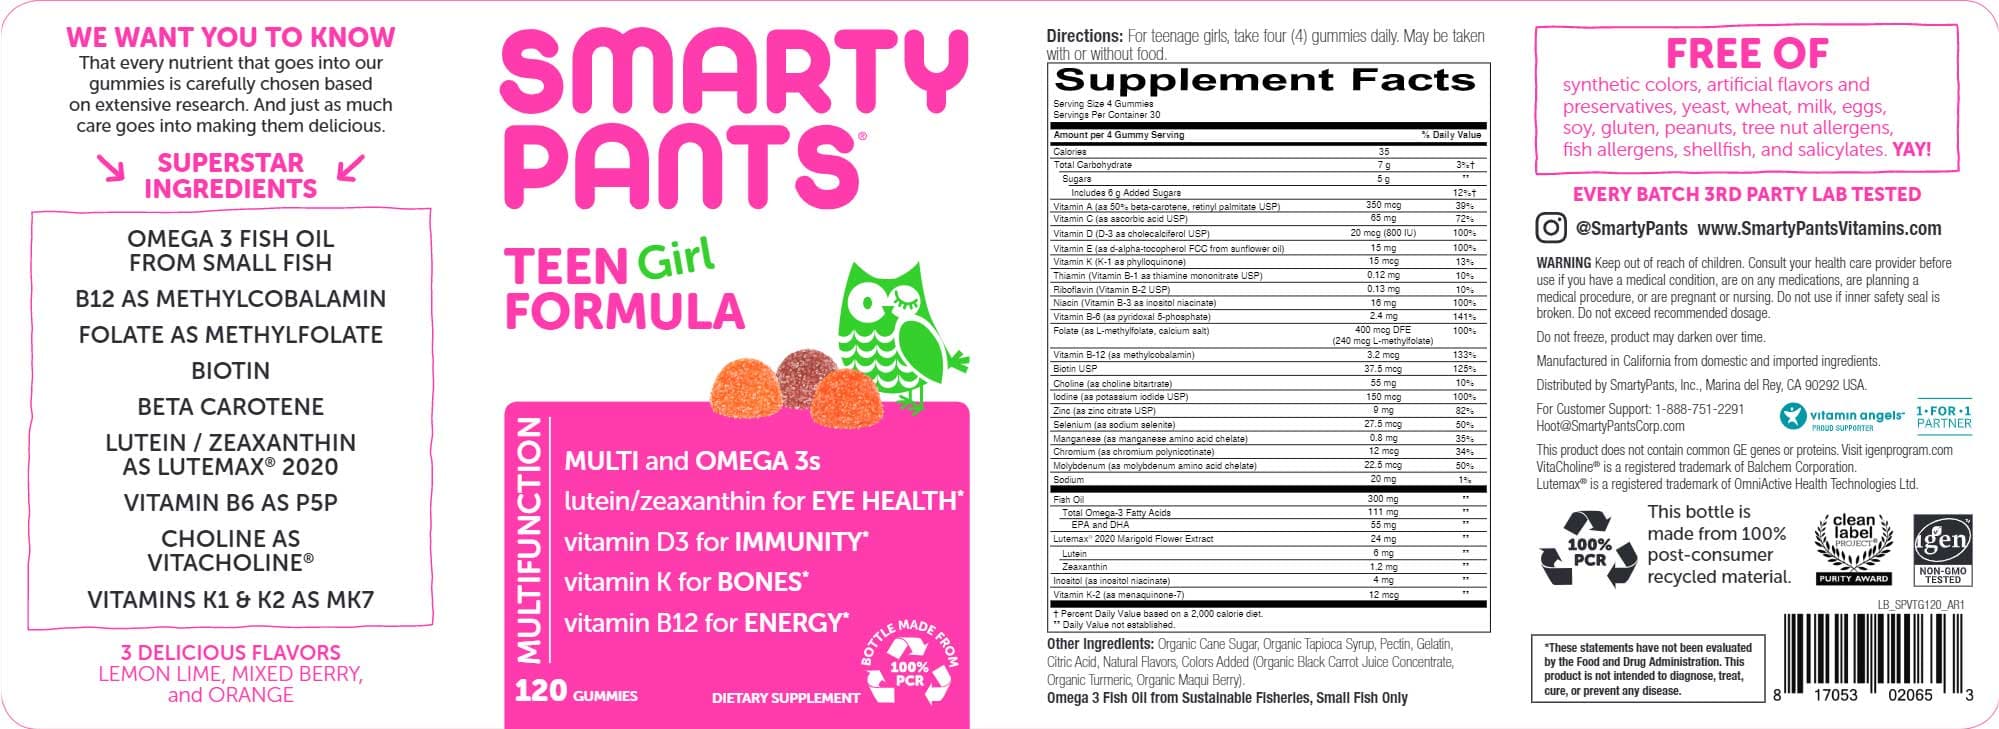 SmartyPants Teen Girl Formula Ingredients